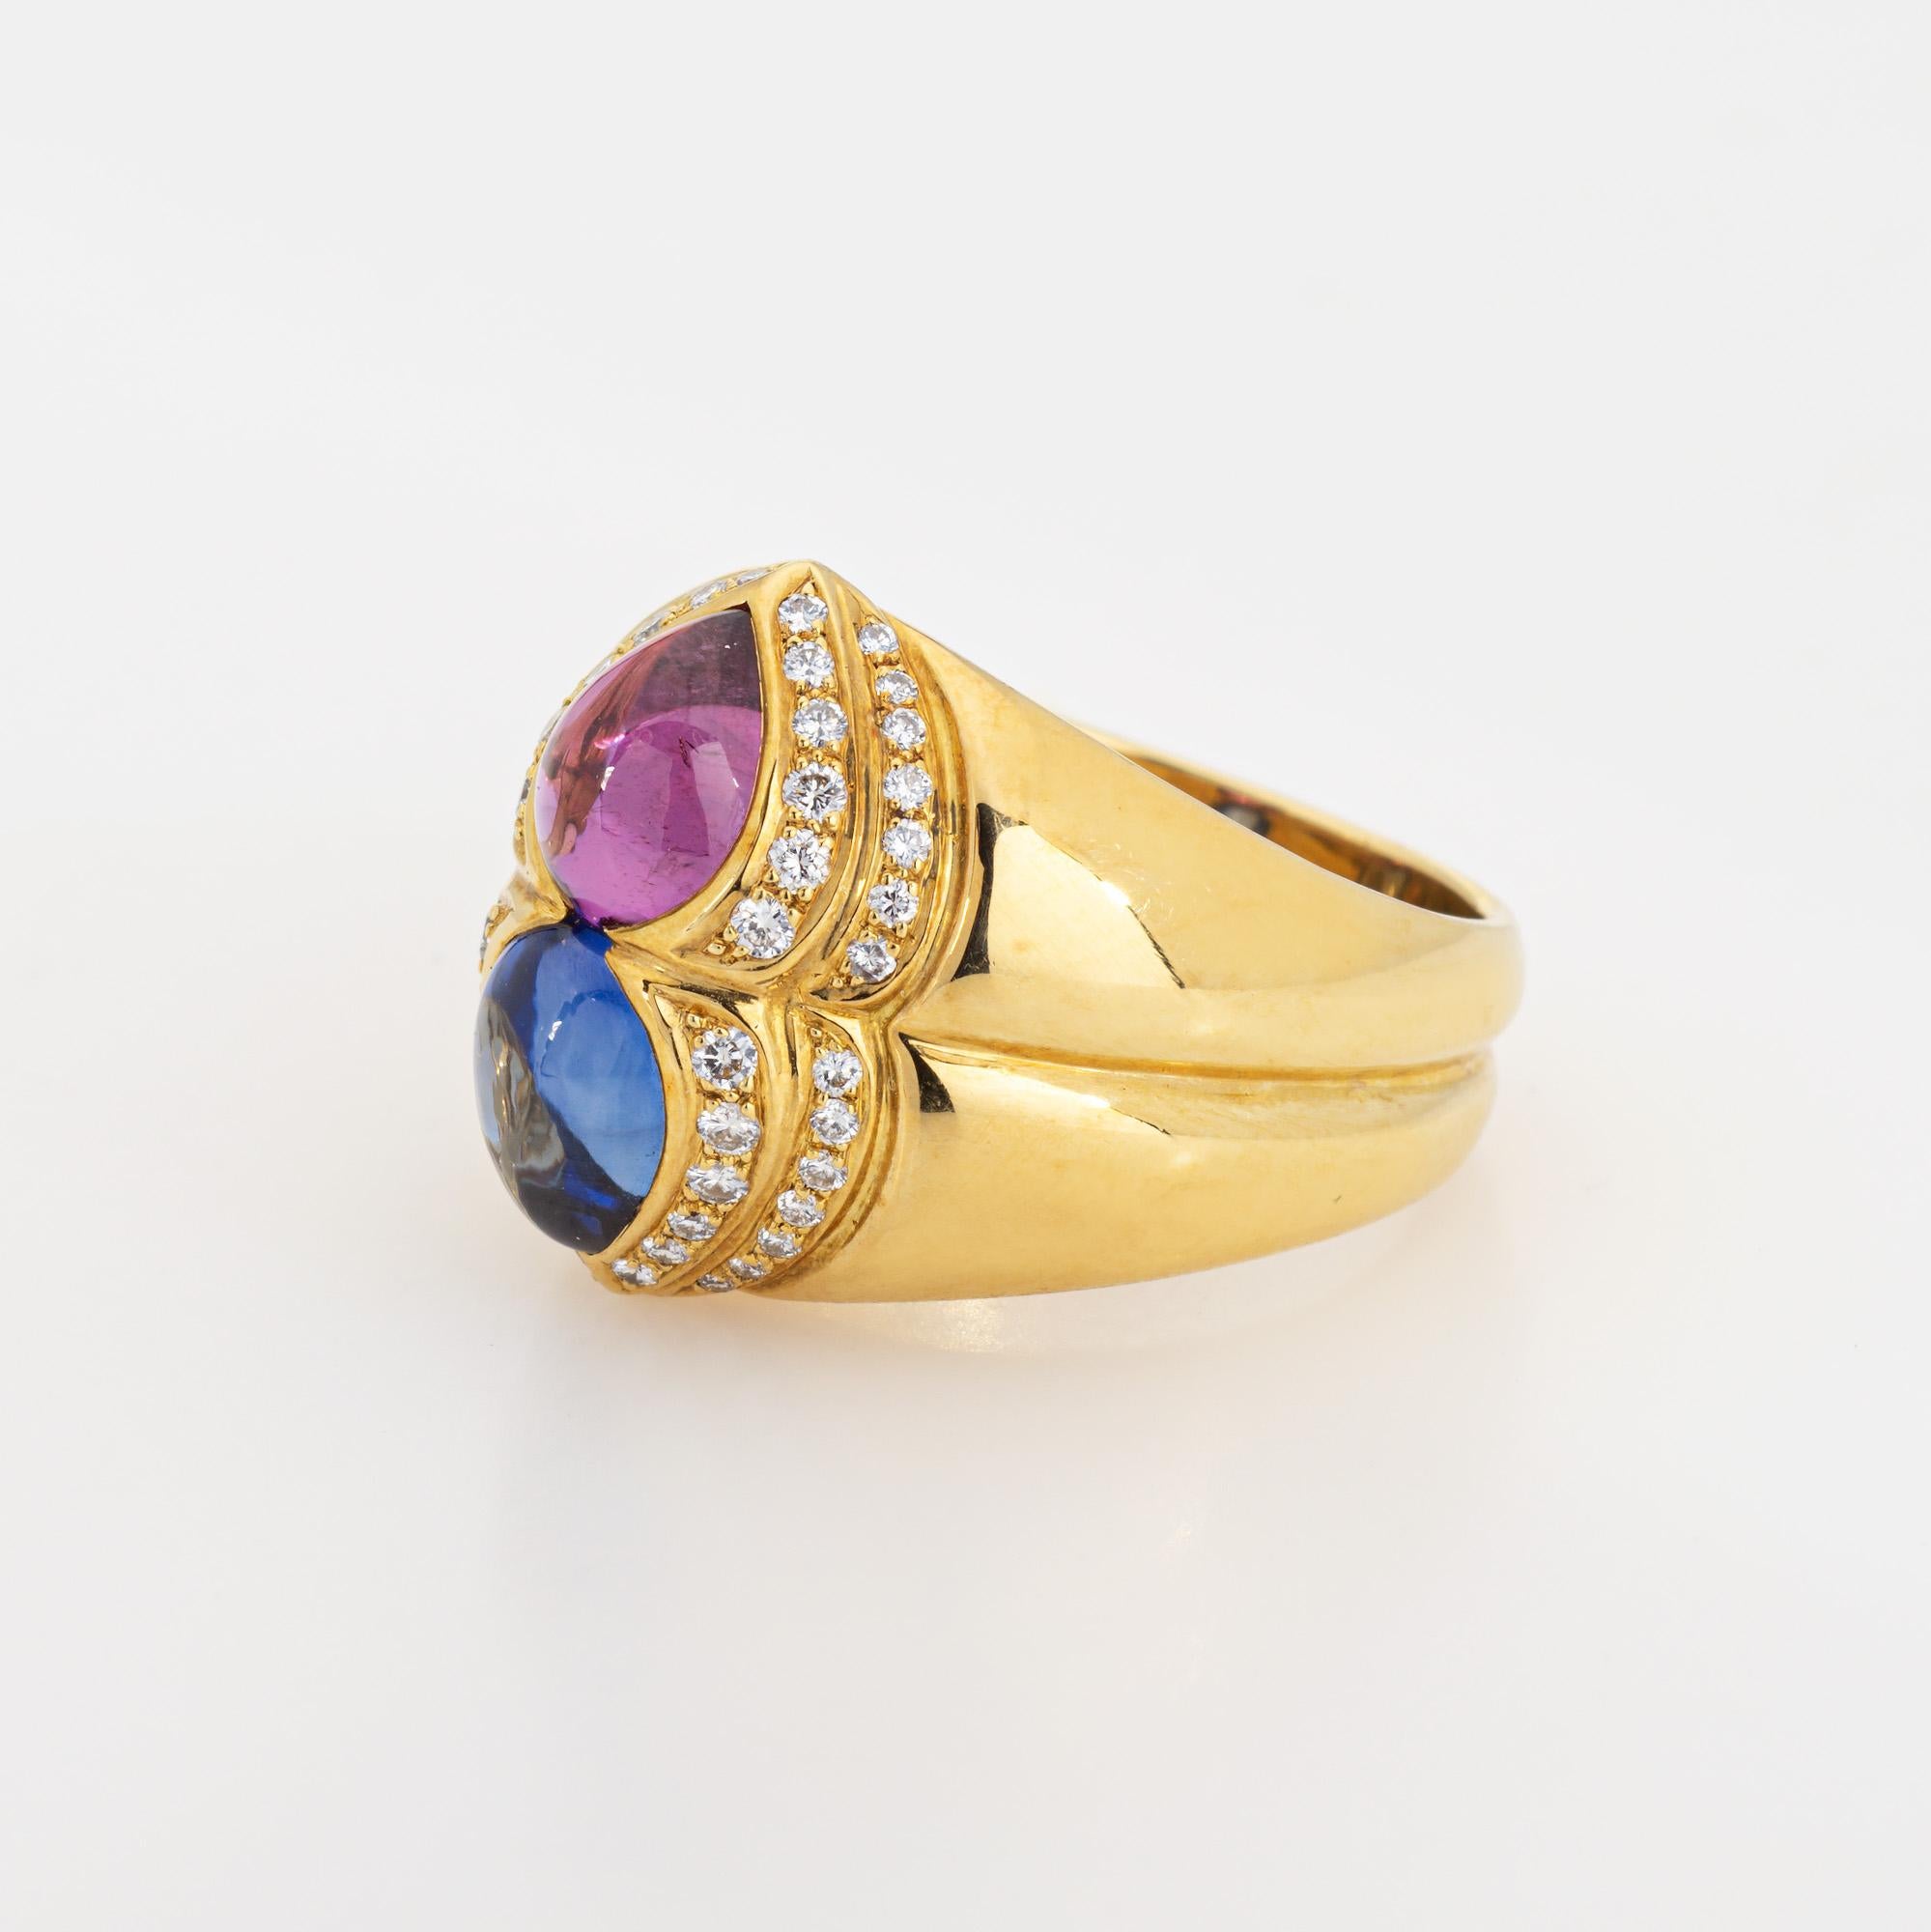 Cabochon Chopard Pink Blue Sapphire Ring Diamond Estate 18k Yellow Gold Sz 6 Band Signed